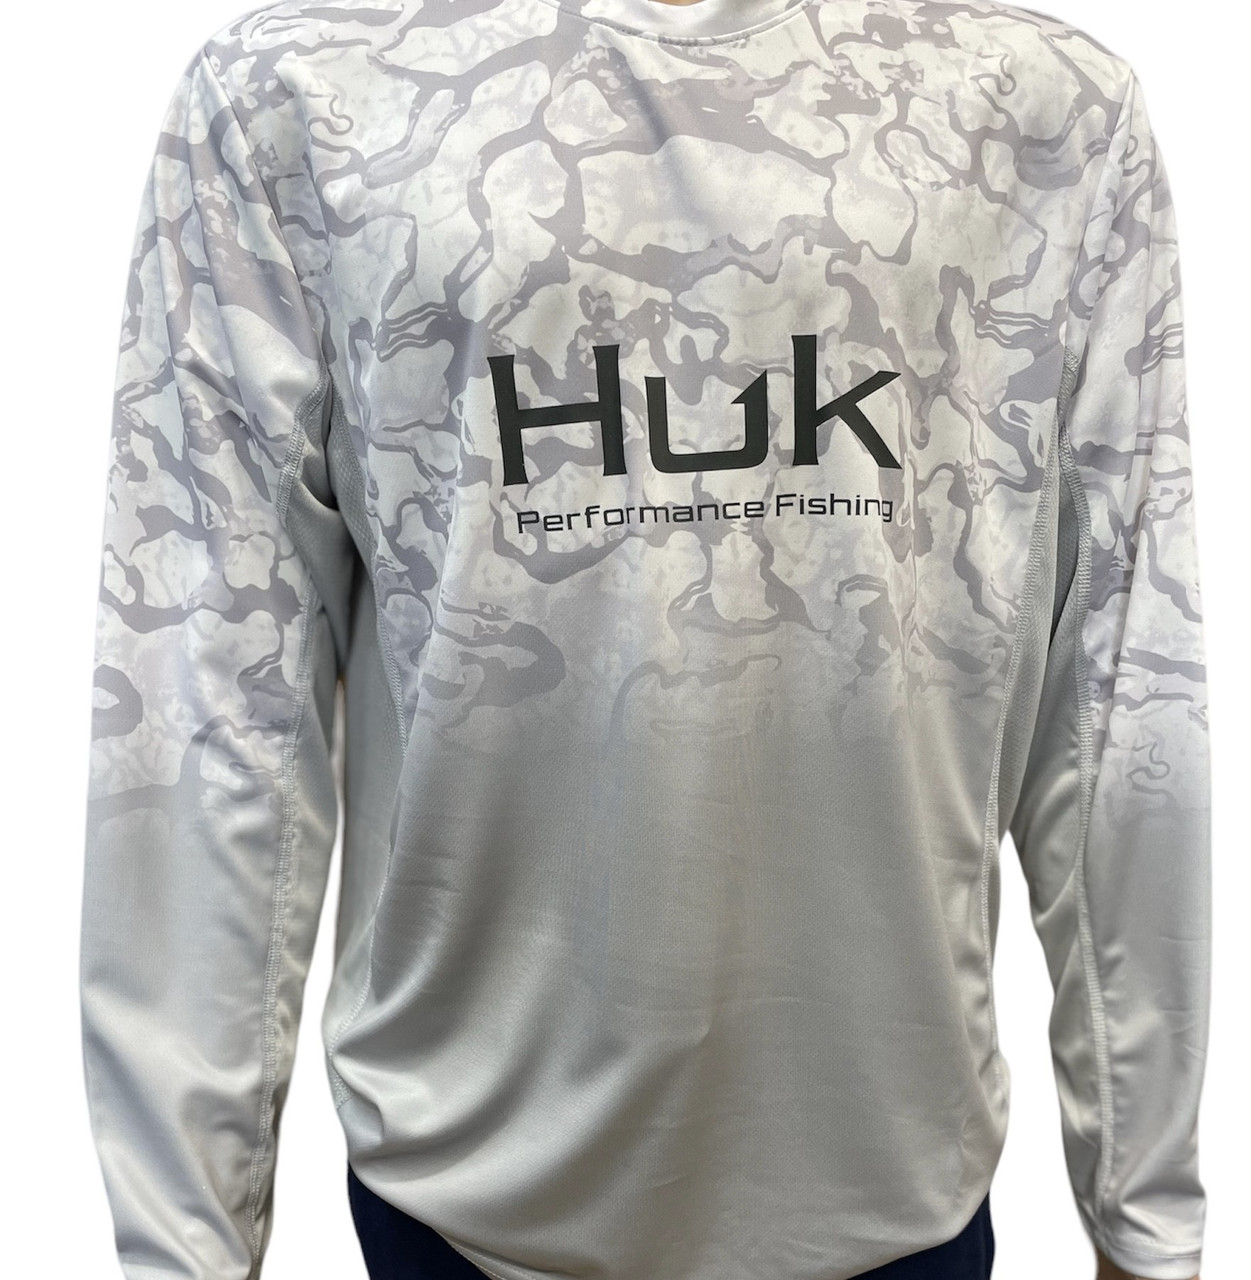 HUK Performance Fishing Shirt Vented Long Sleeve Uv Protection